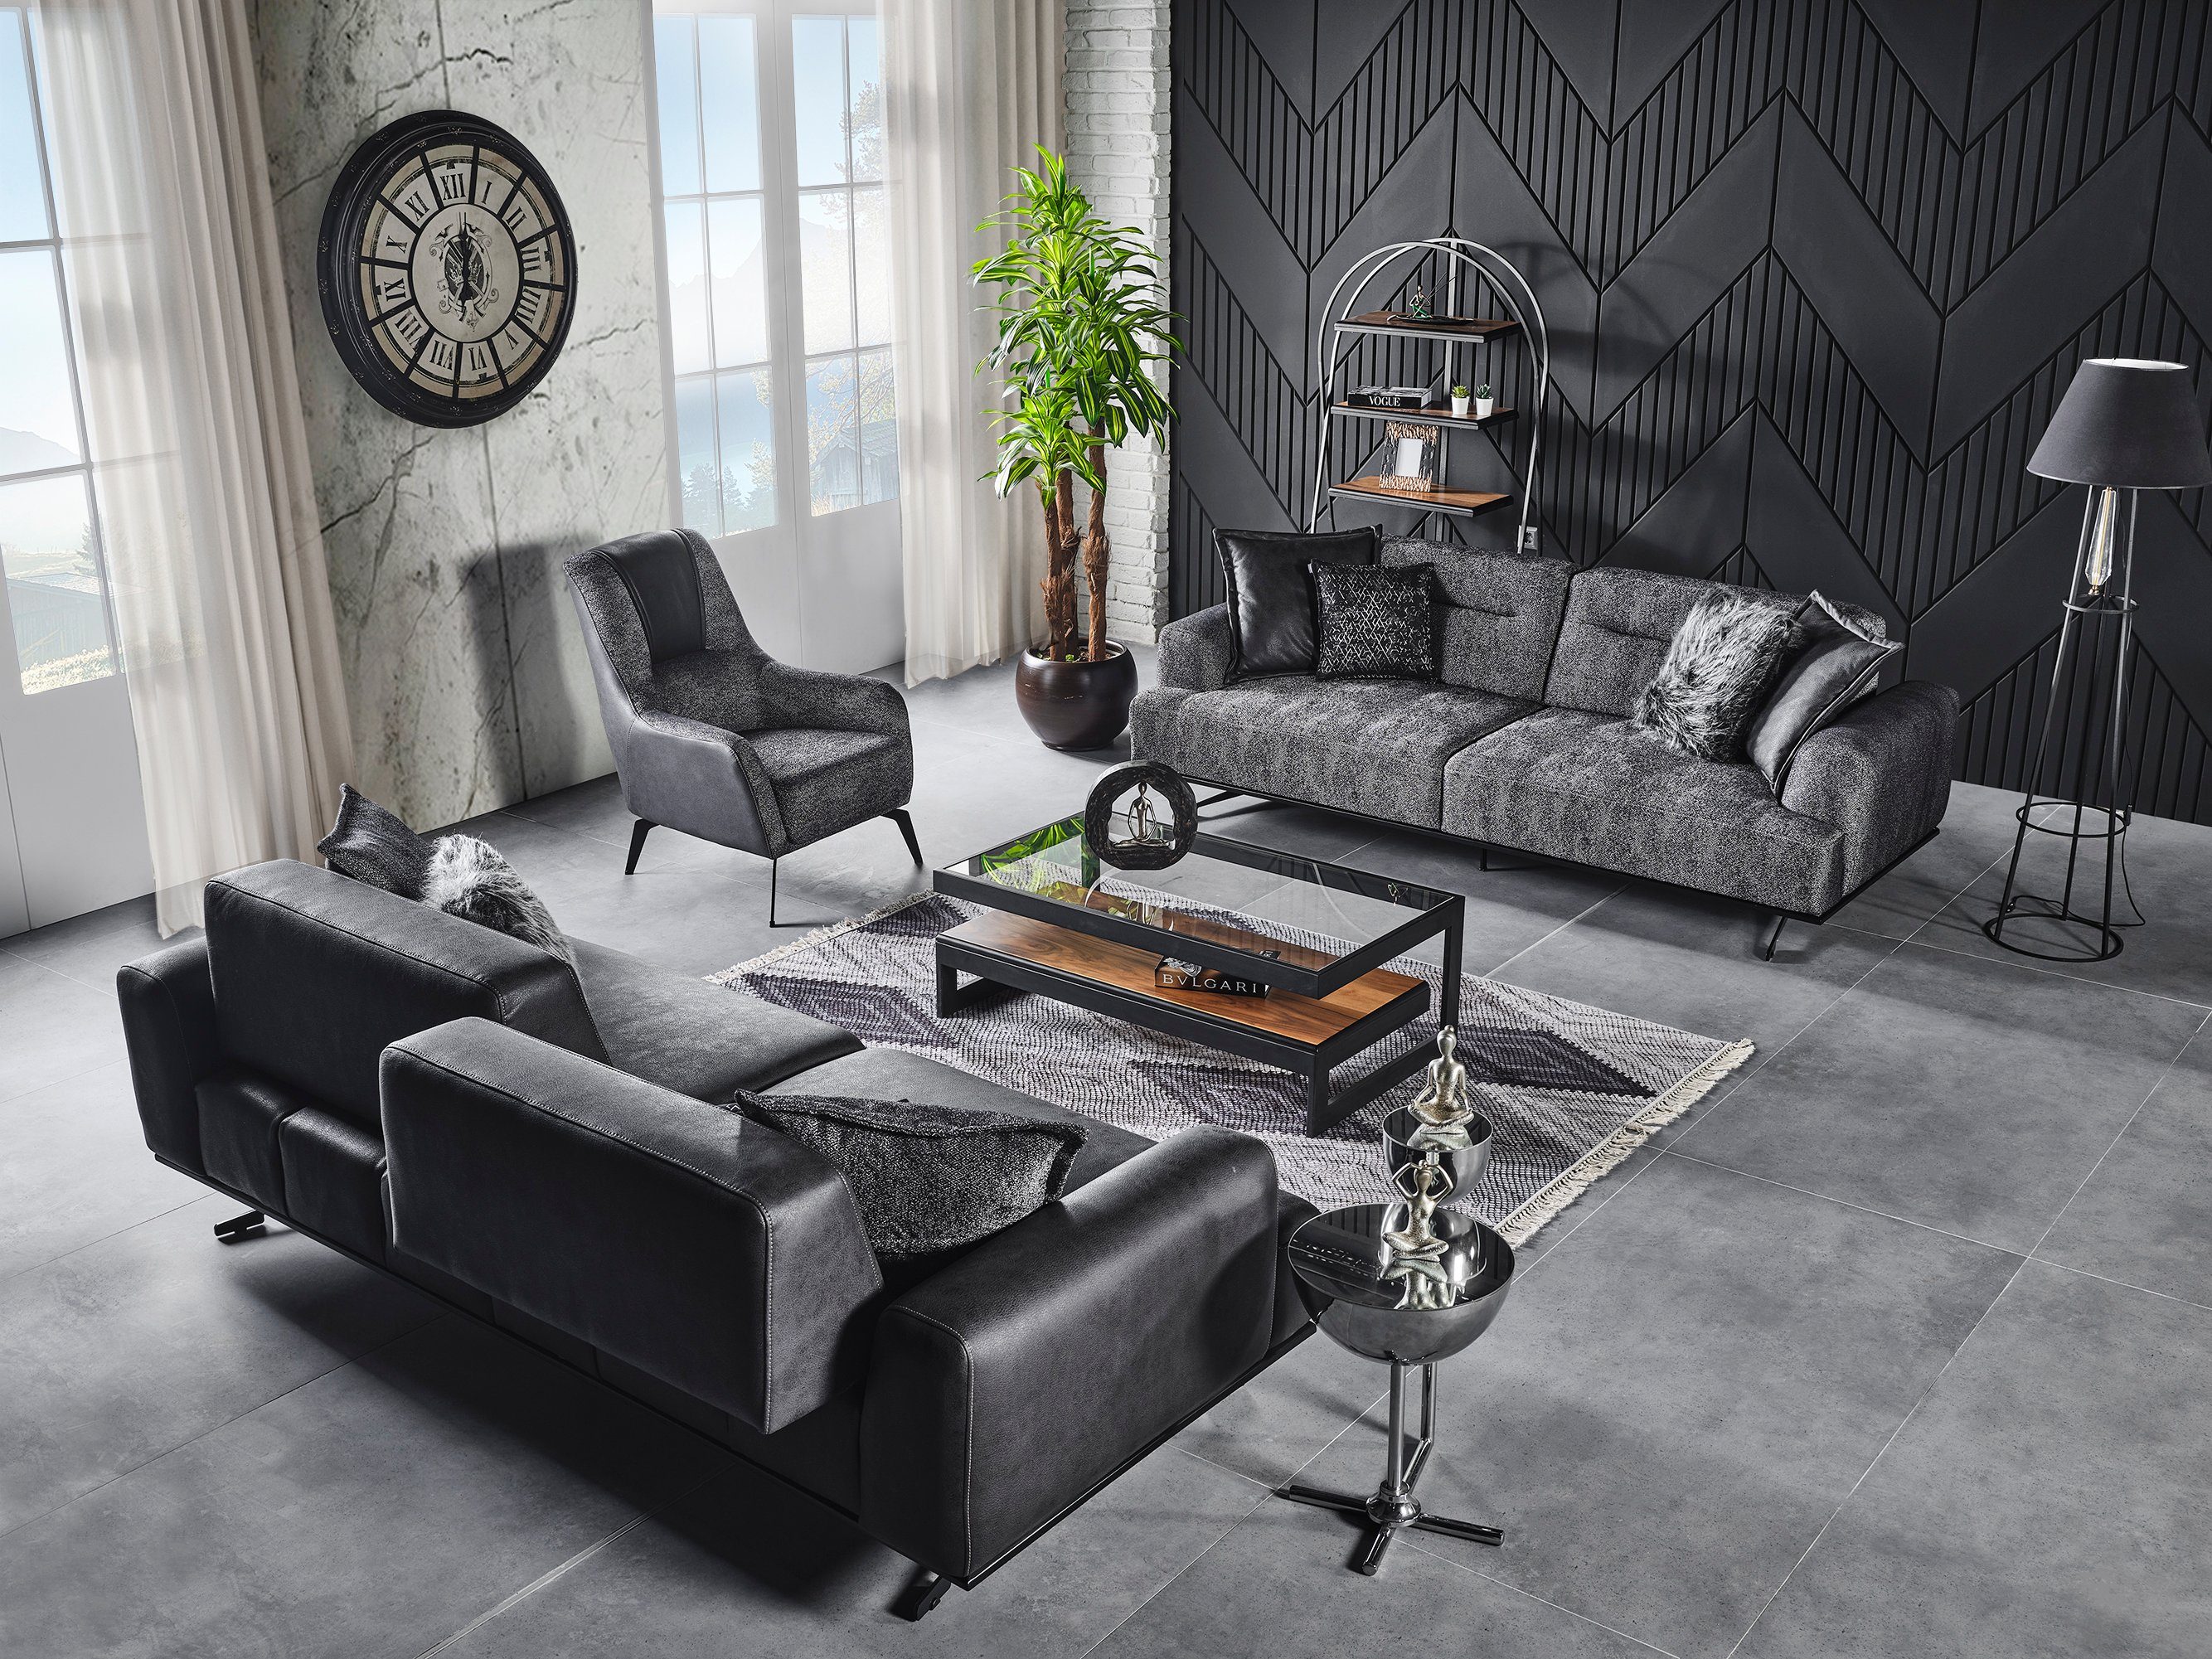 1 Mikrofaser Royal, Teil, Villa Quality,strapazierfähiger Anthrazit Samtstoff Handmade Möbel Sofa